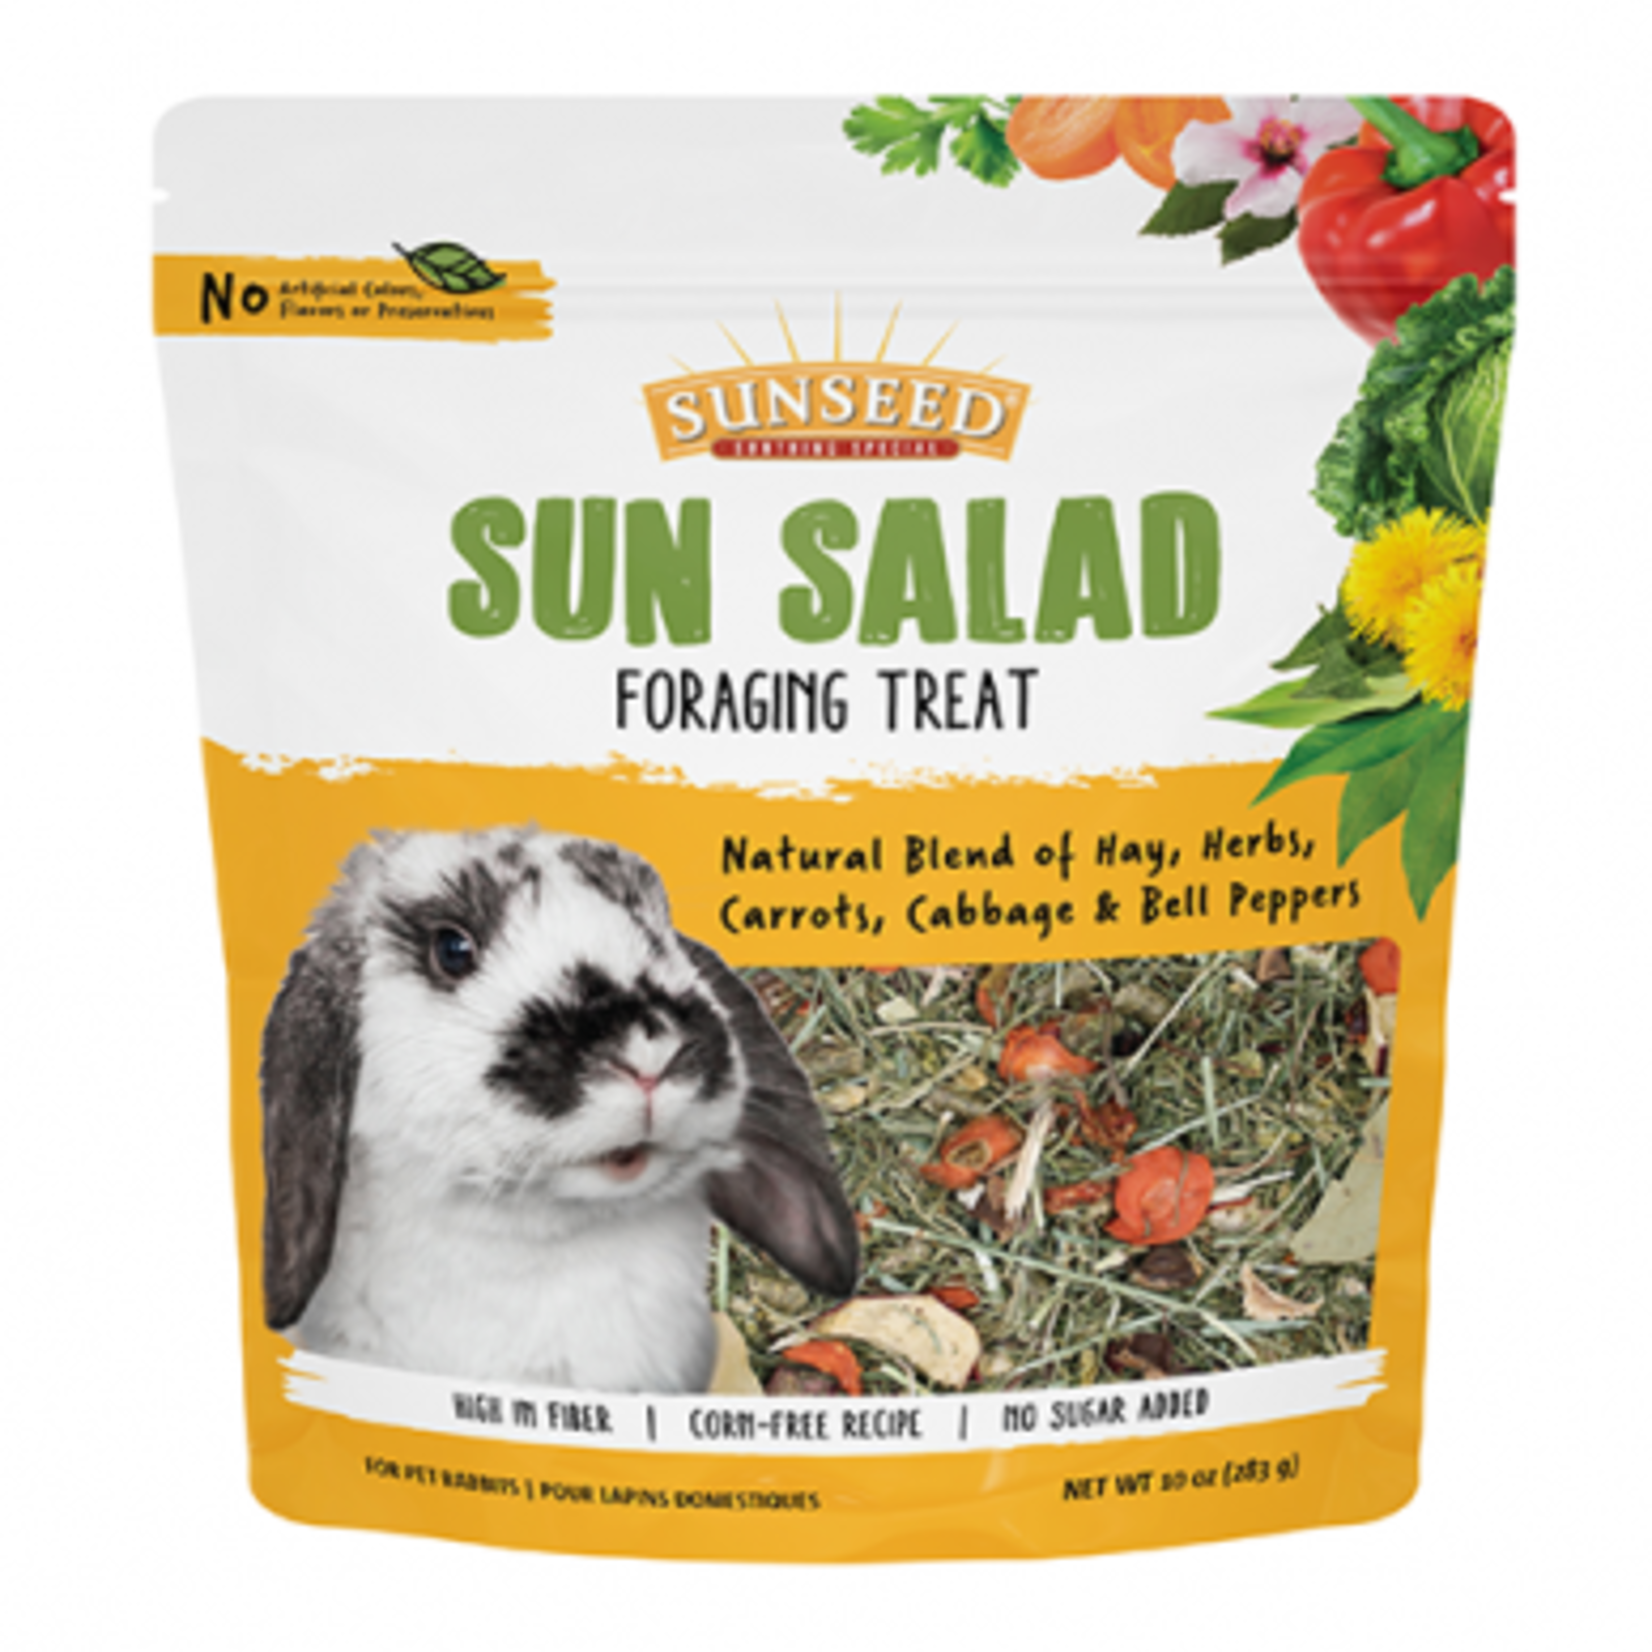 Sunseed Vita Prima - Sun Salad dor rabbits - High Fiber Treats - 10 oz